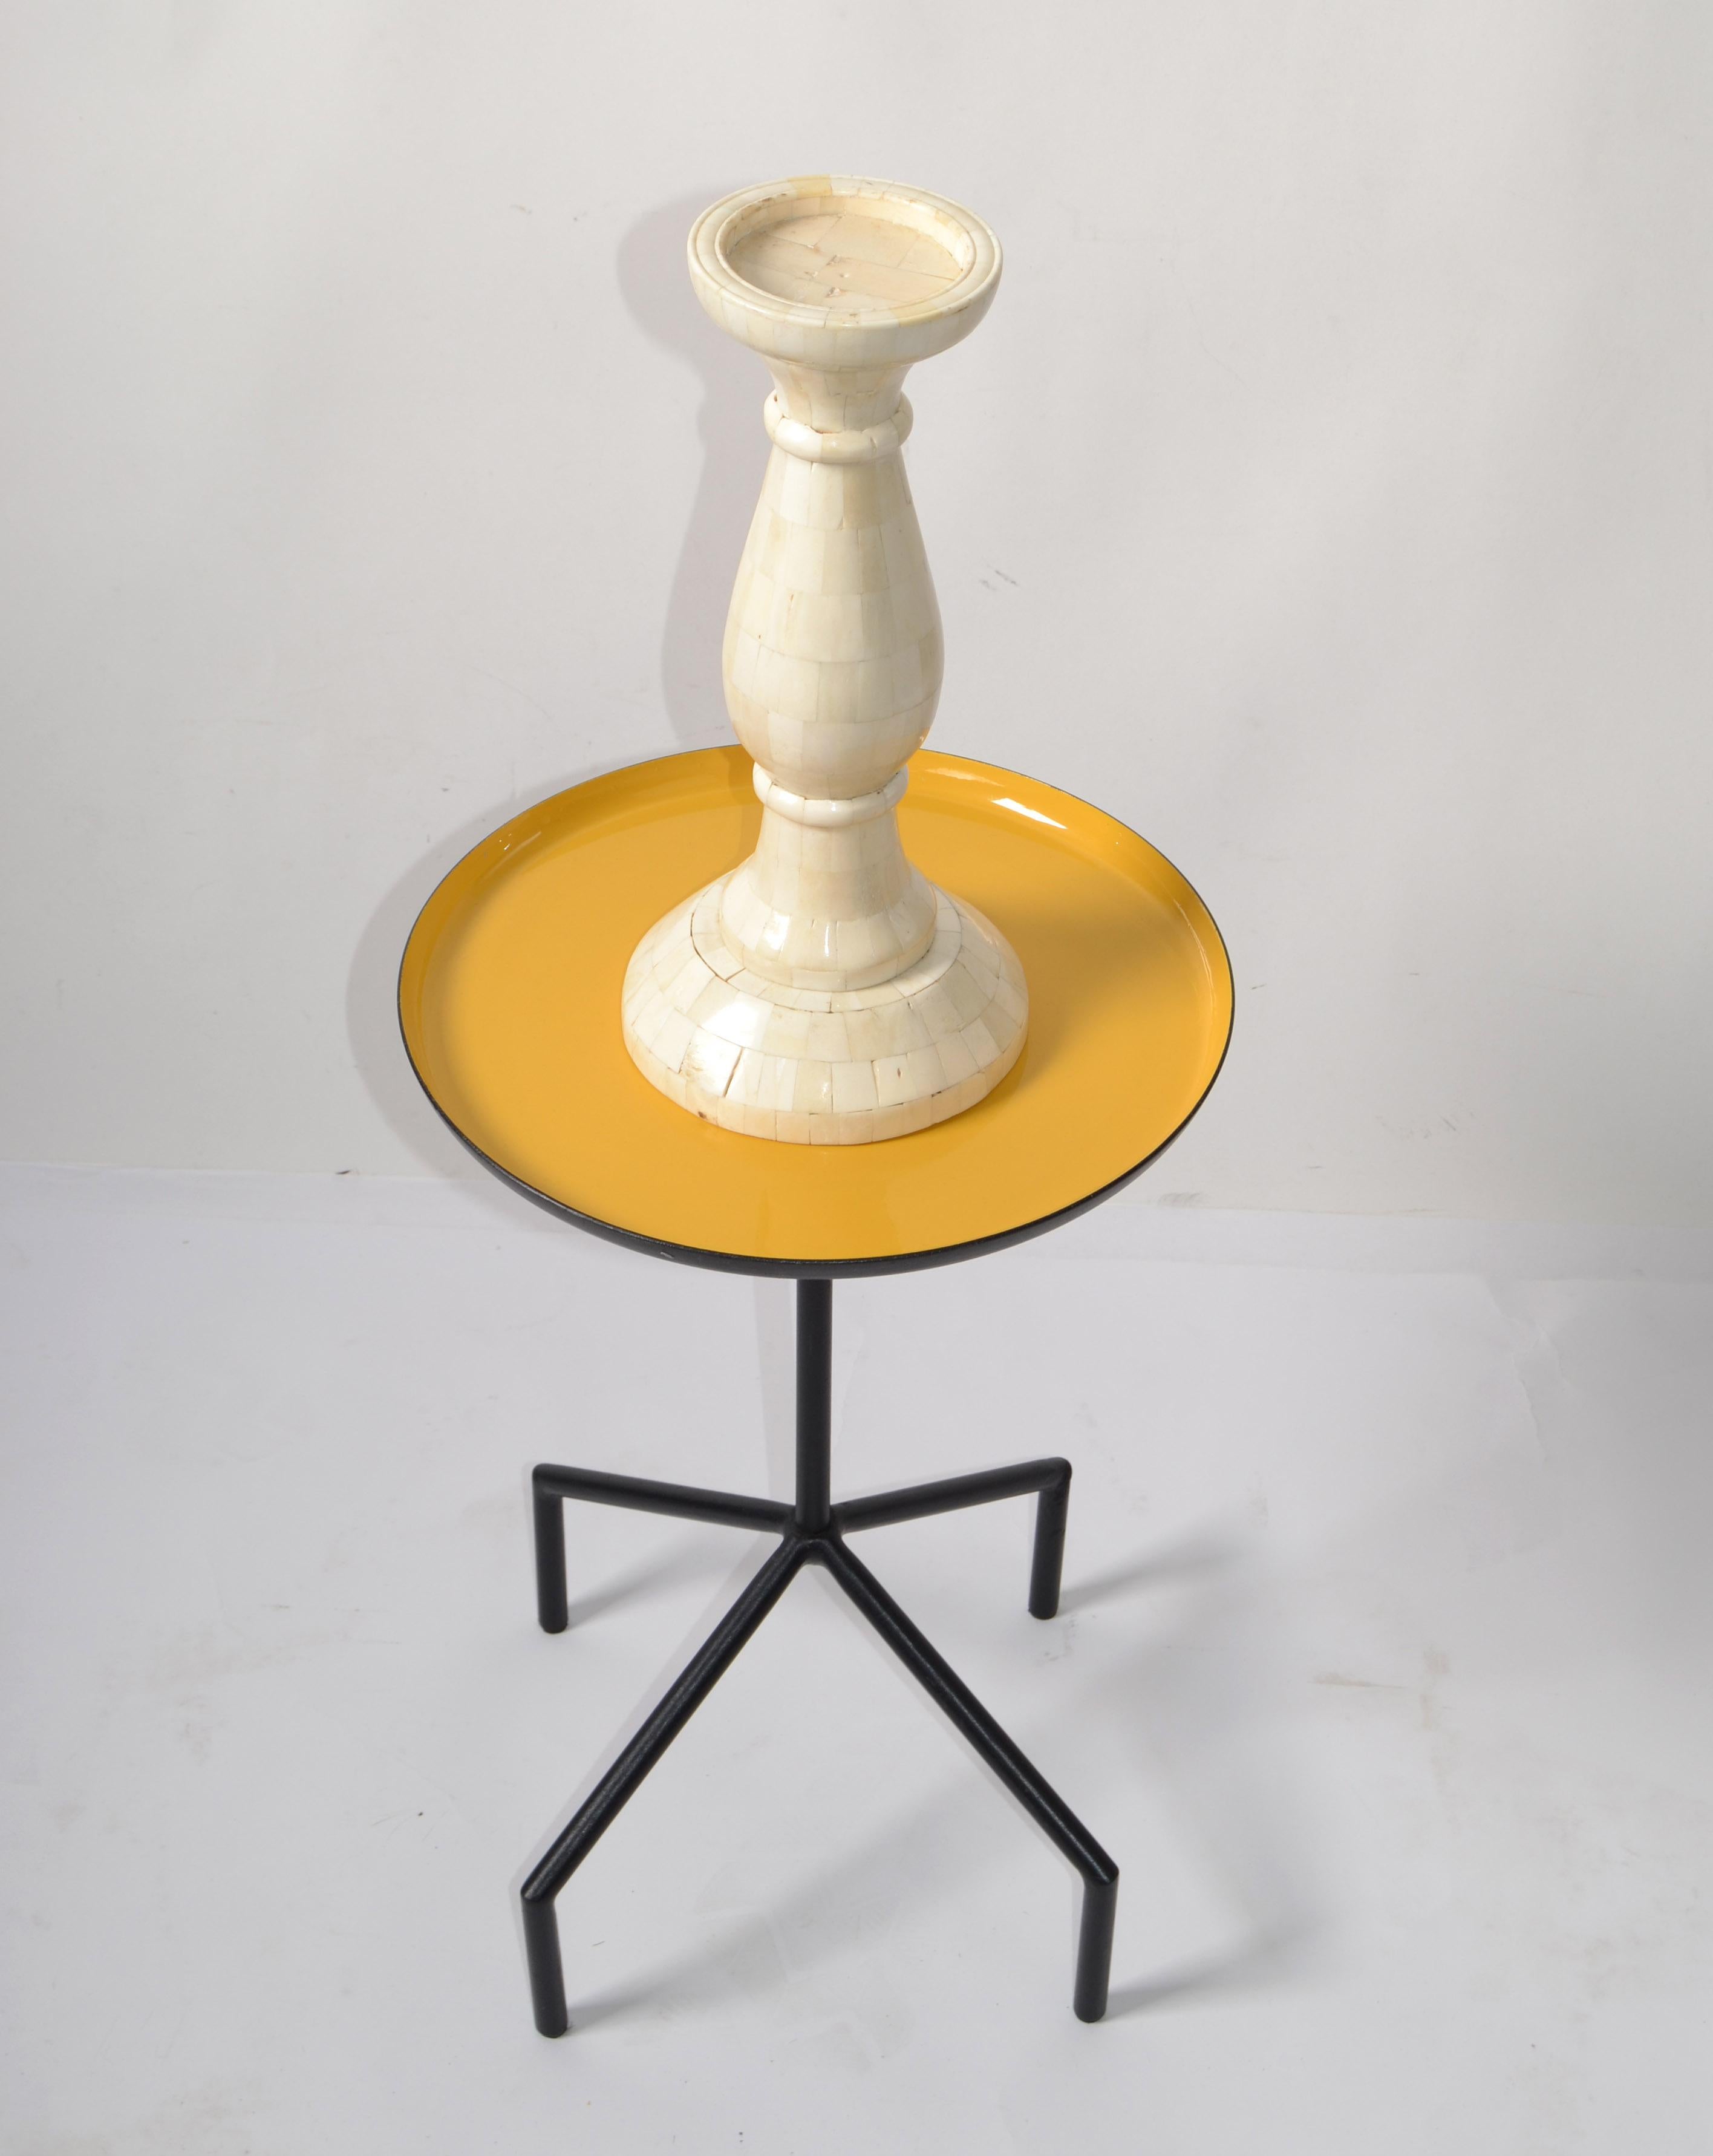 1980 Herman Miller Style Yellow Enamel Tray Side Table Black Iron Gazelle Base For Sale 1